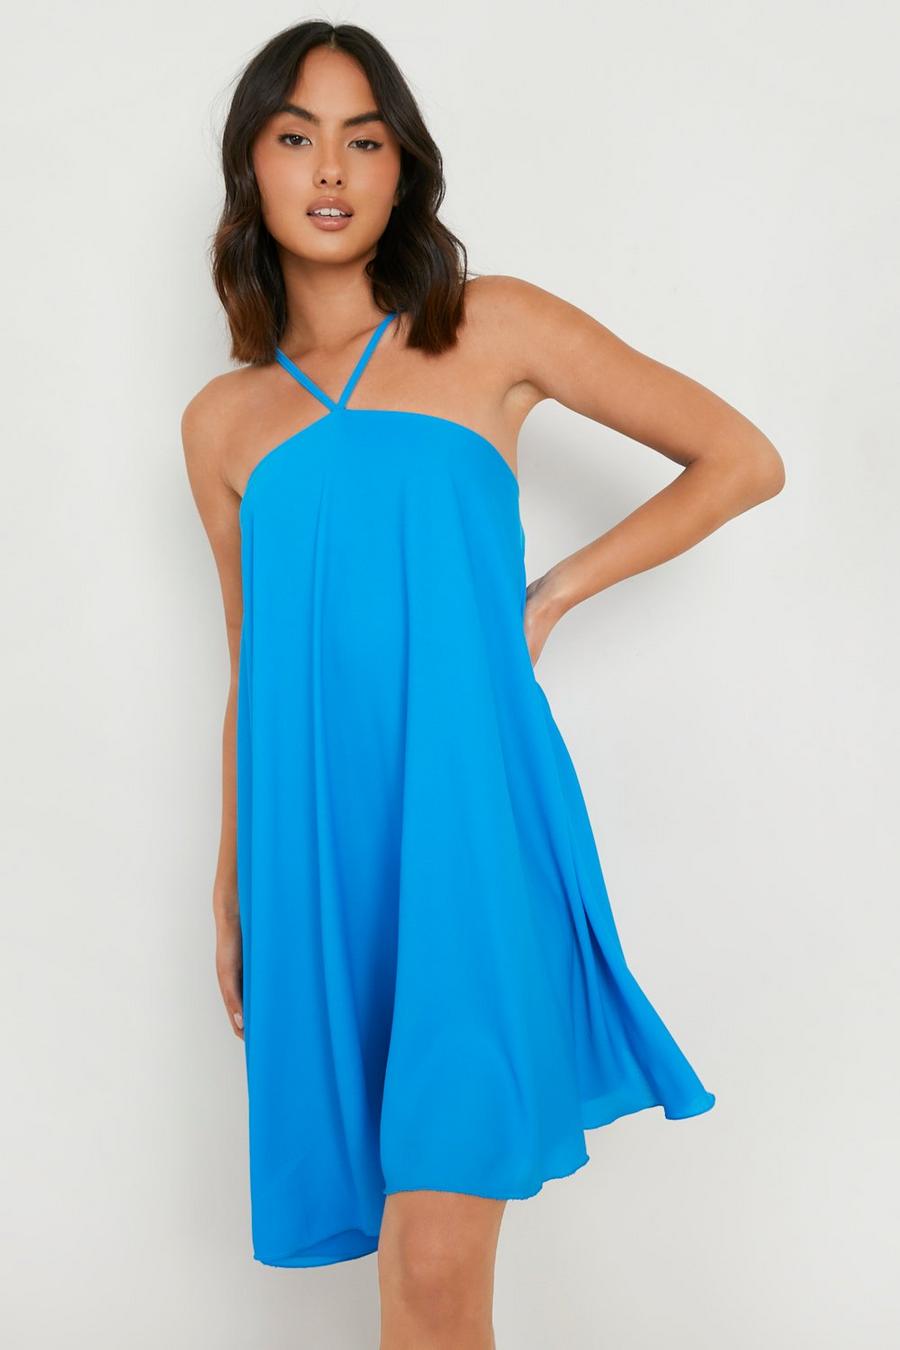 Bright blue Chiffon Strappy Extreme Swing Dress